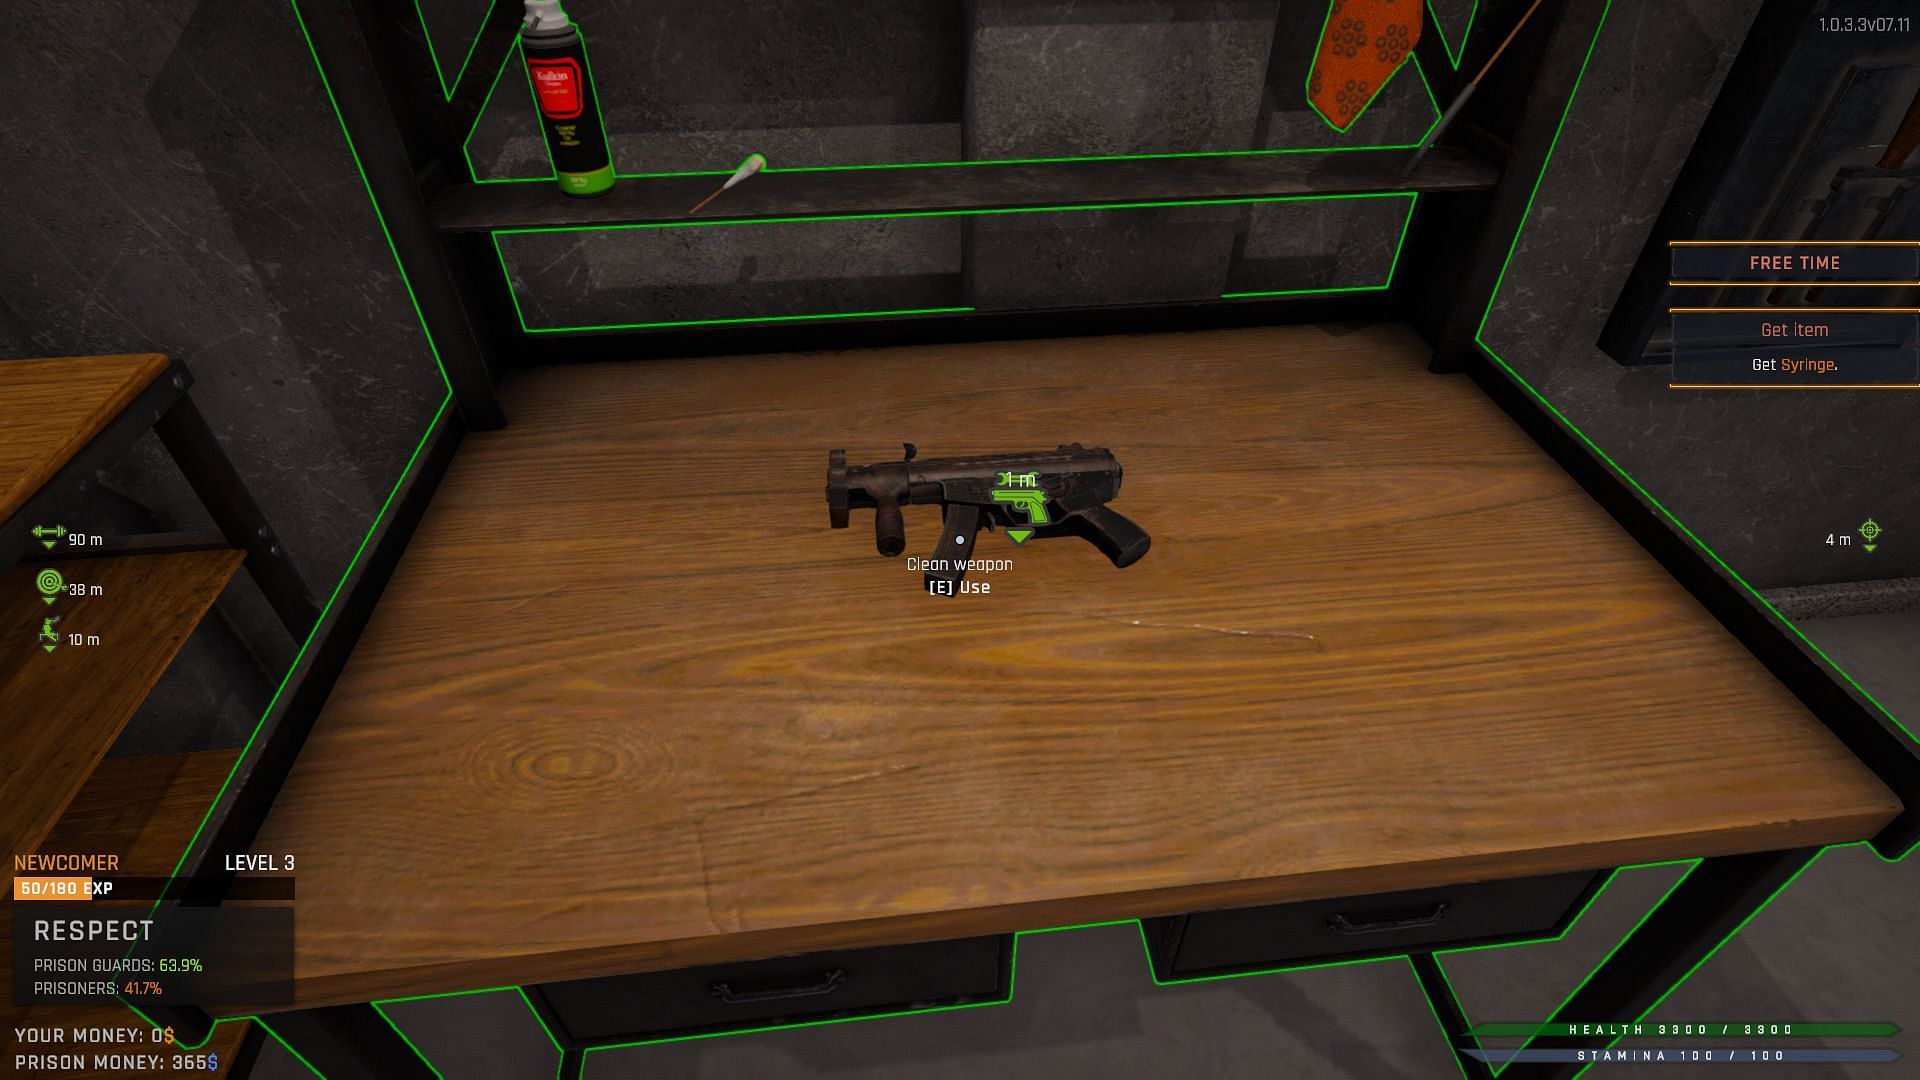 Cleaning a gun (Image via Prison Simulator)